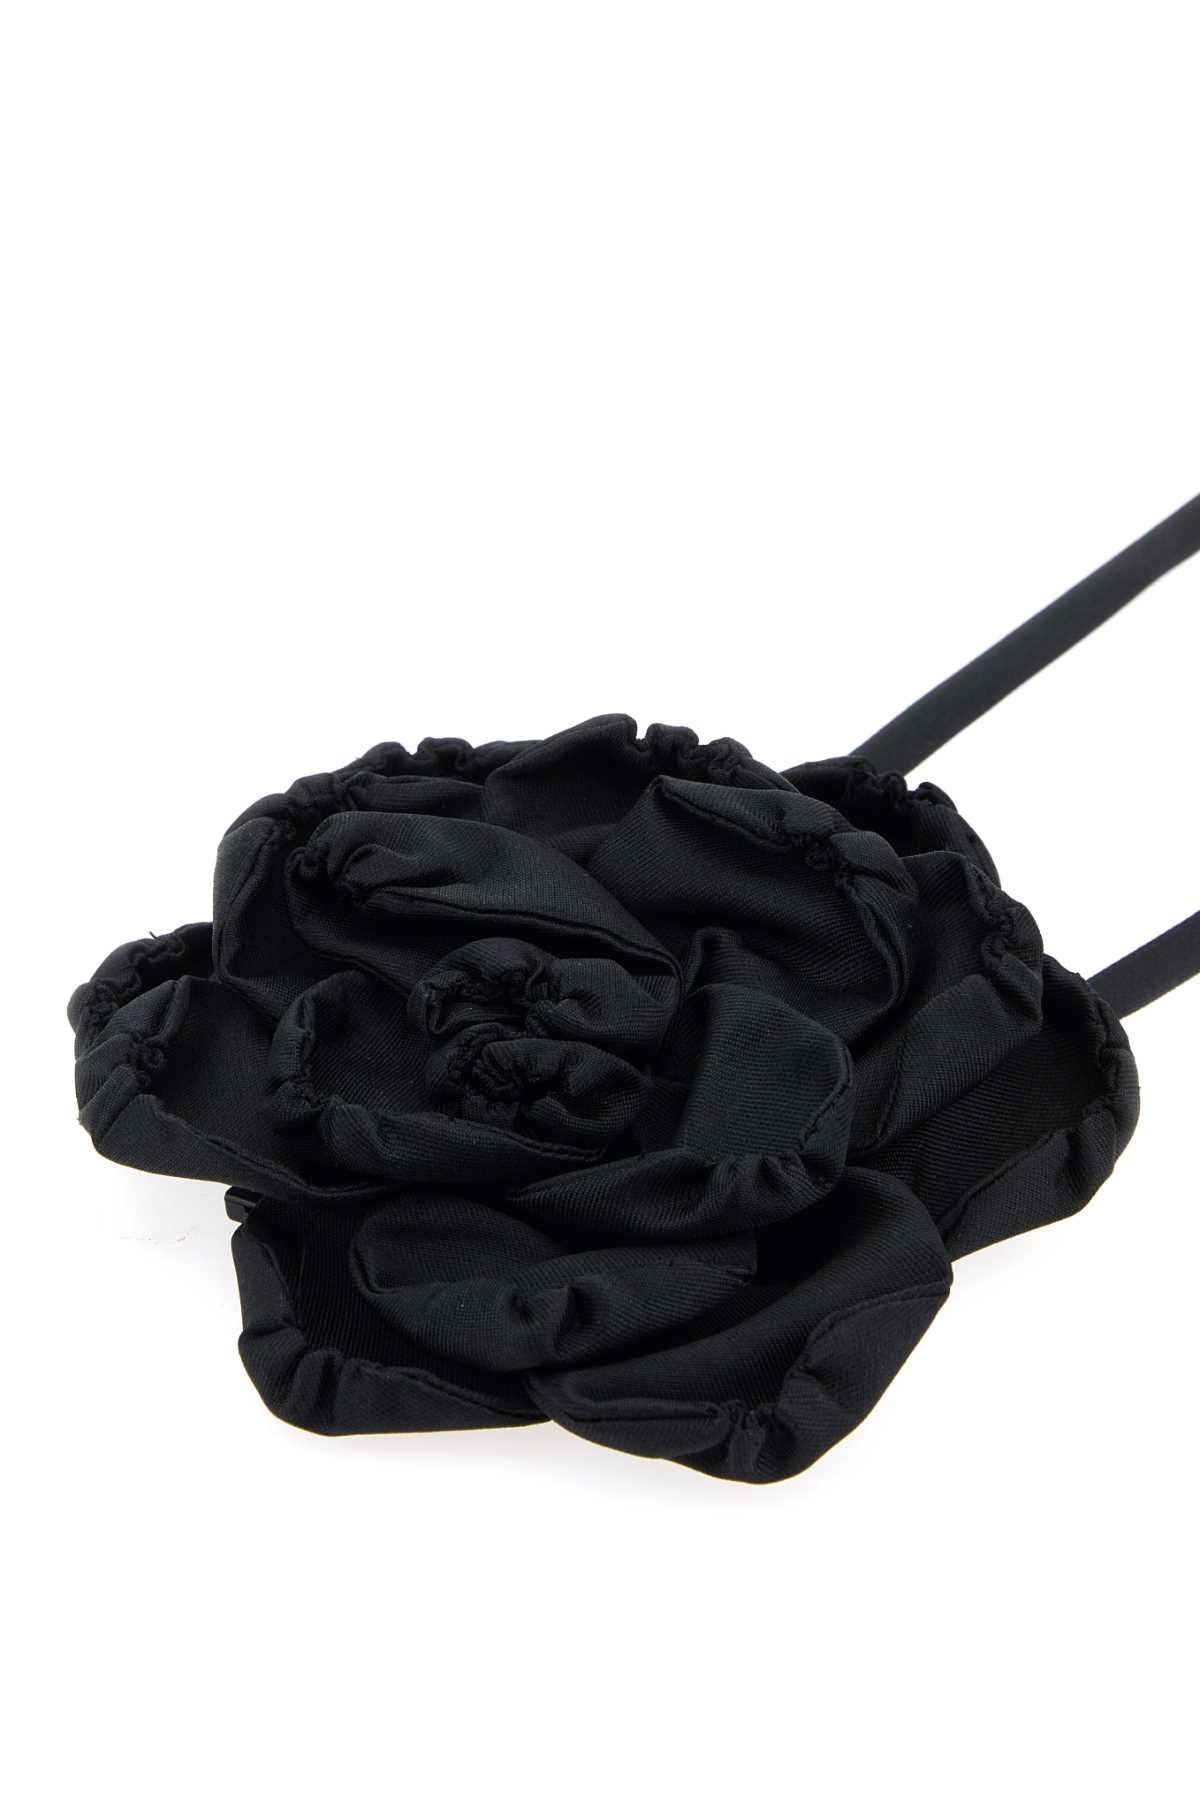 Dolce & Gabbana Black Silk Blend Choker In Nero